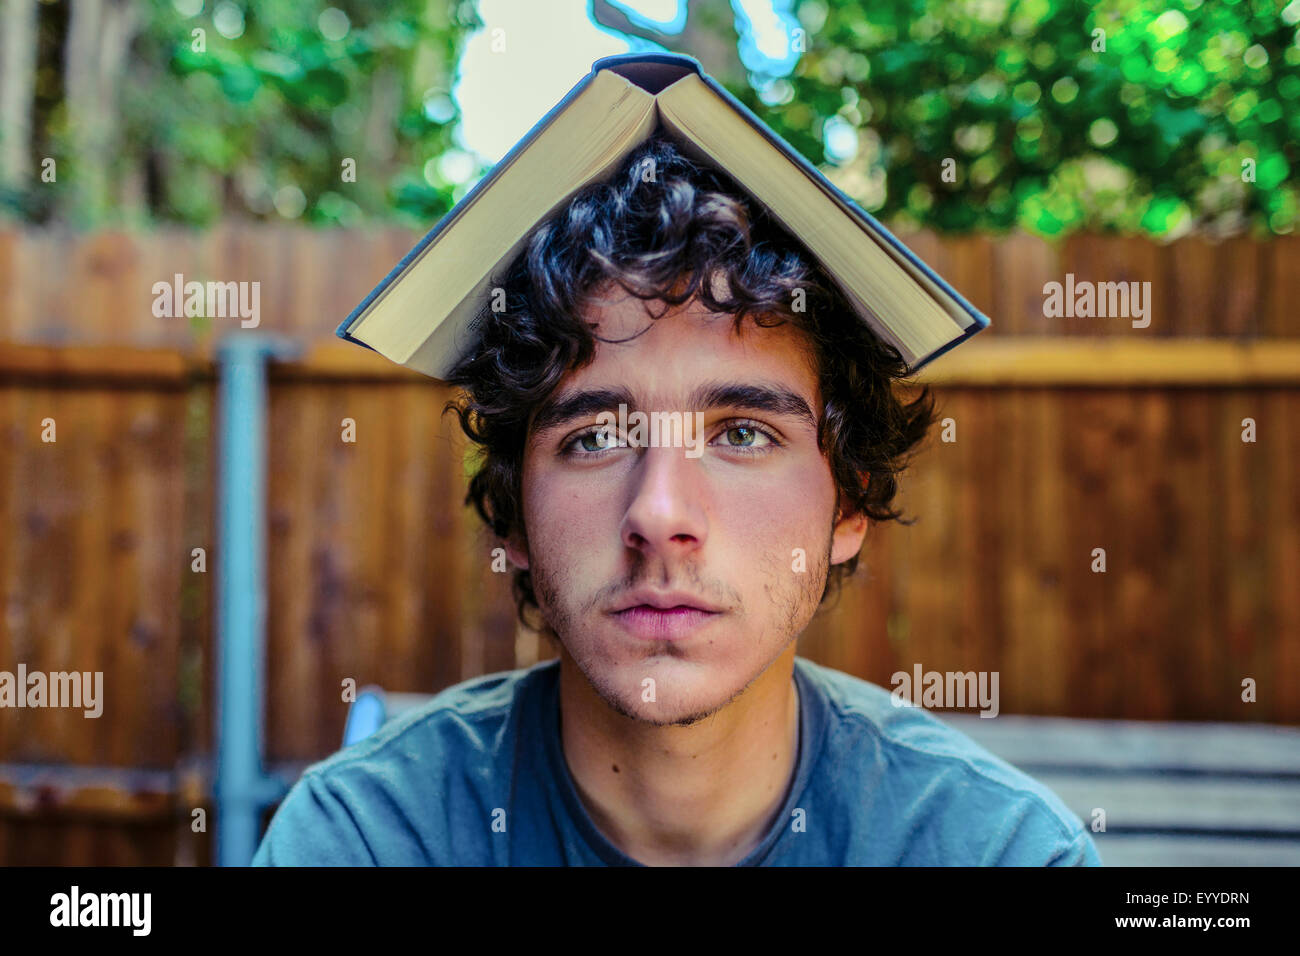 Hispanic man balancing book on head in backyard Stock Photo